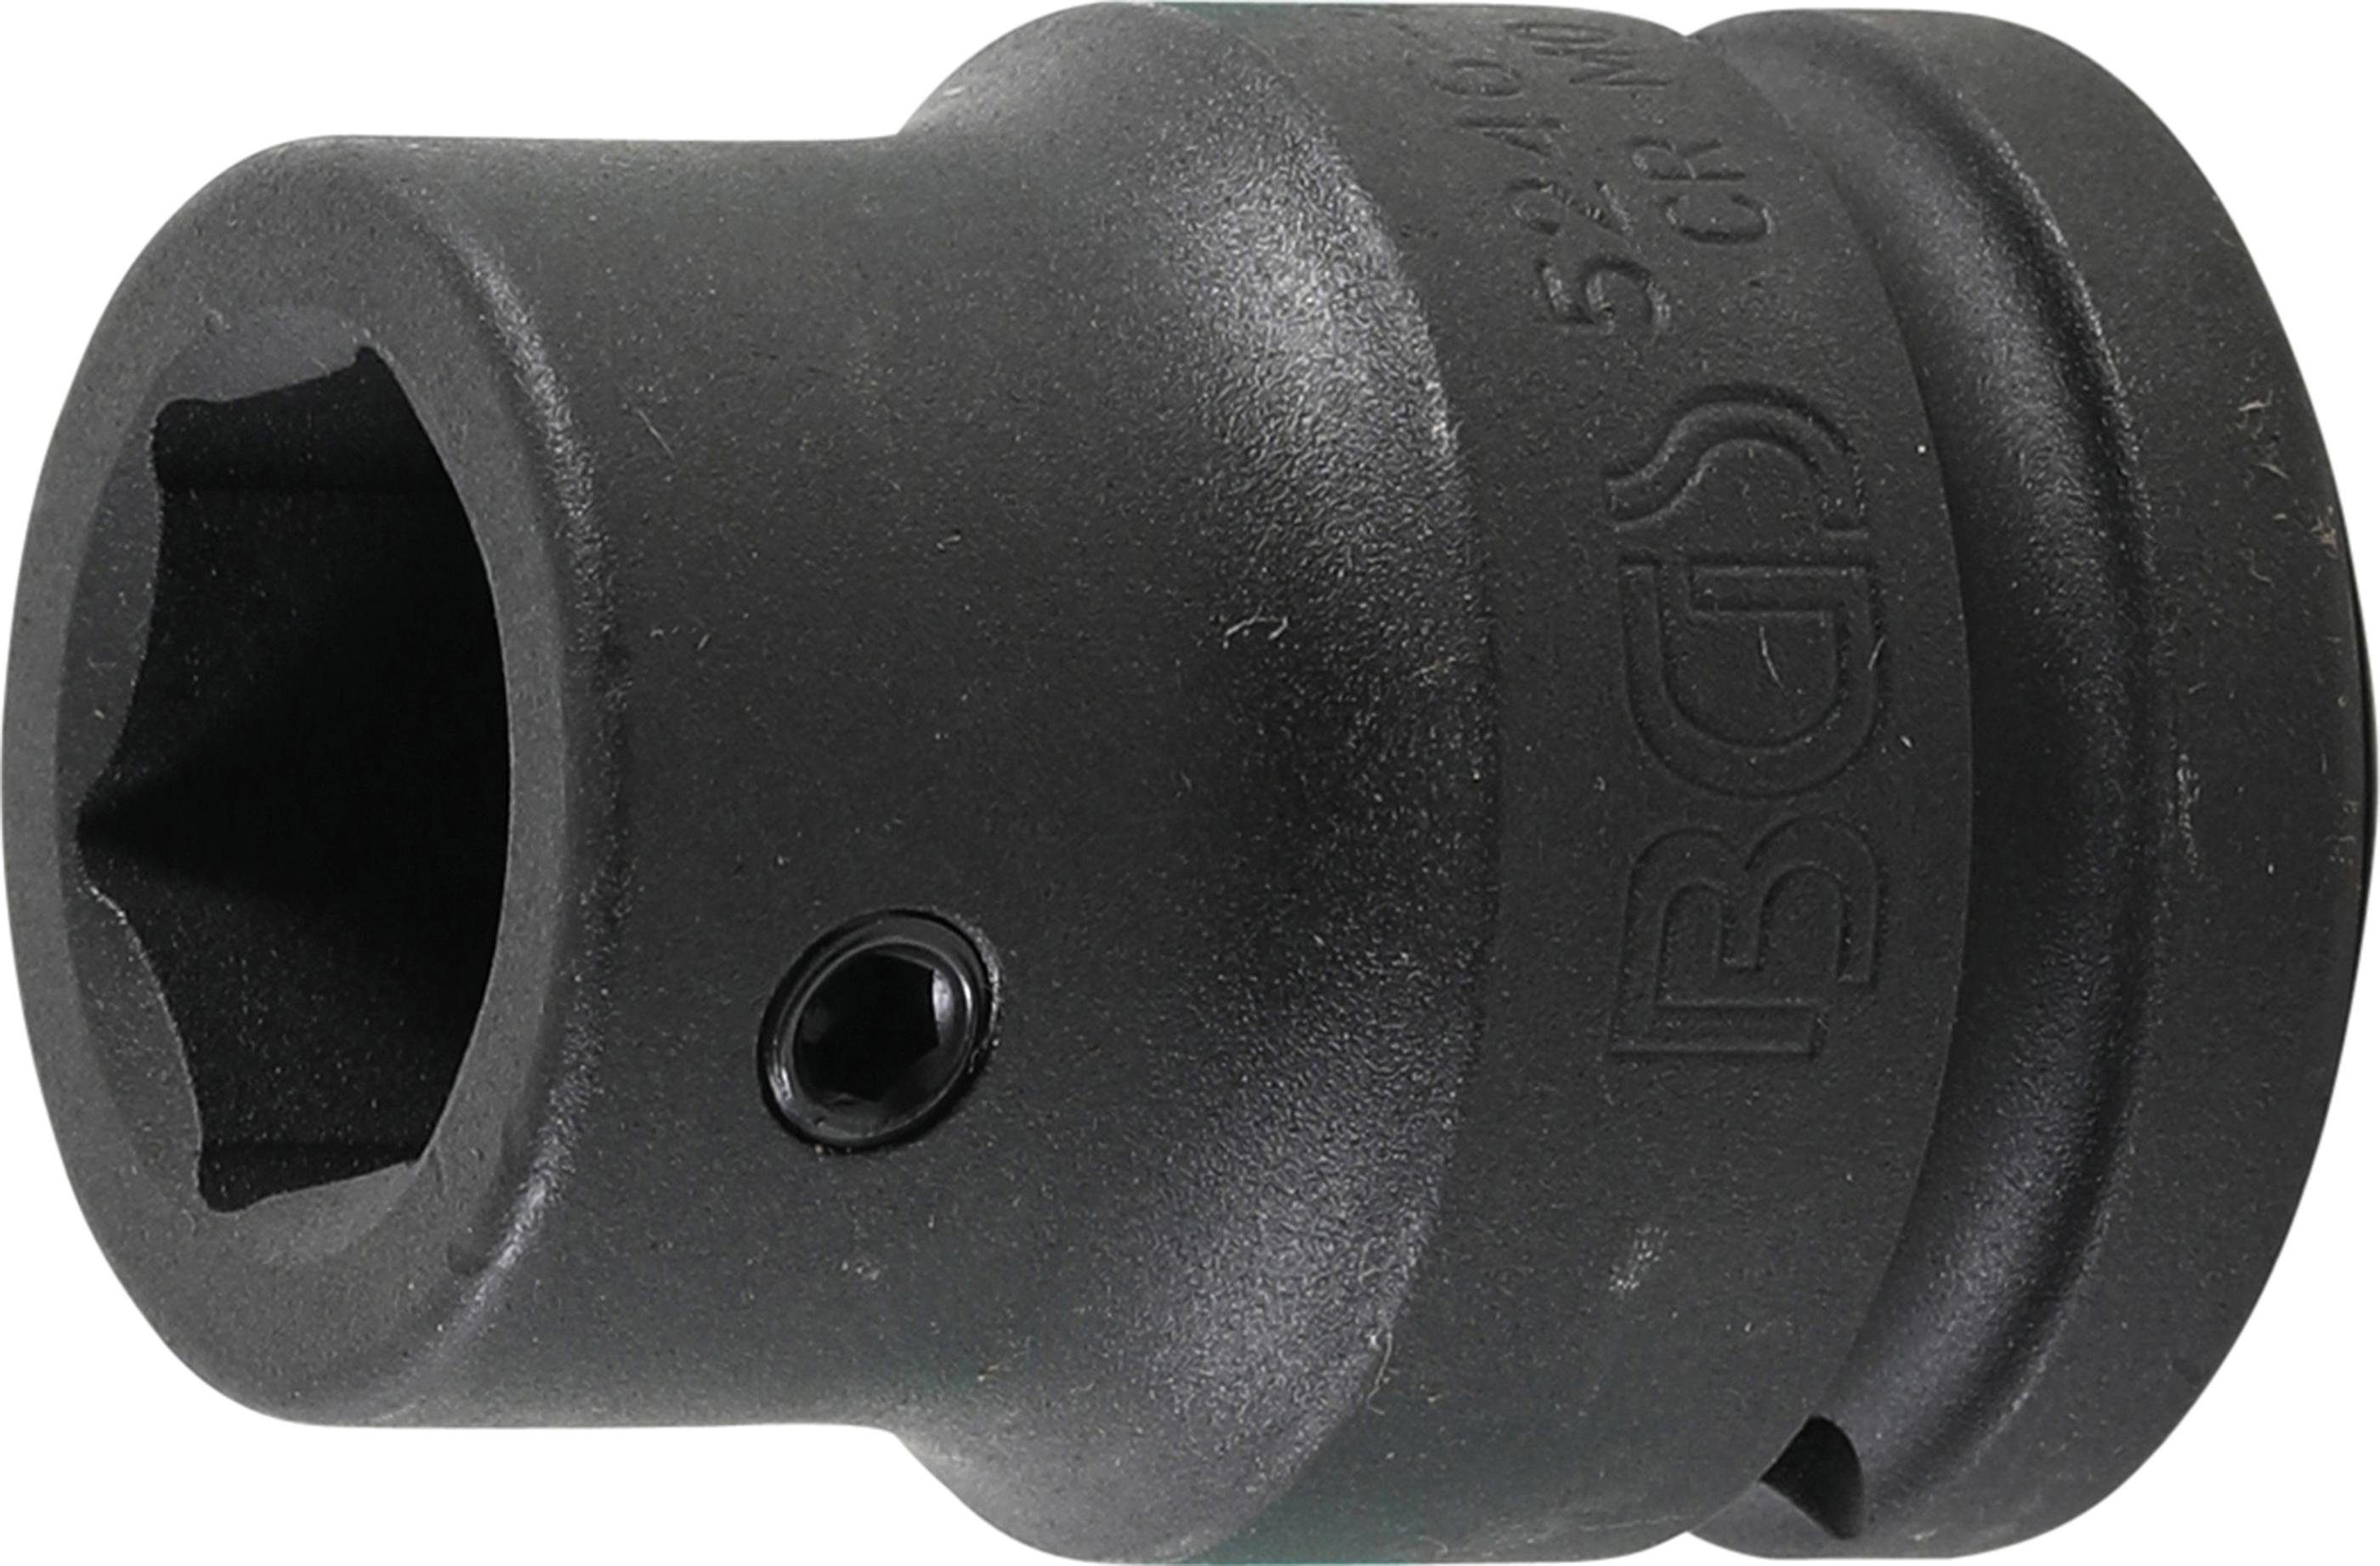 BGS technic Bit-Schraubendreher Bit-Adapter, für Art. 5246, Innenvierkant 20 mm (3/4) - Innensechskant 22 mm